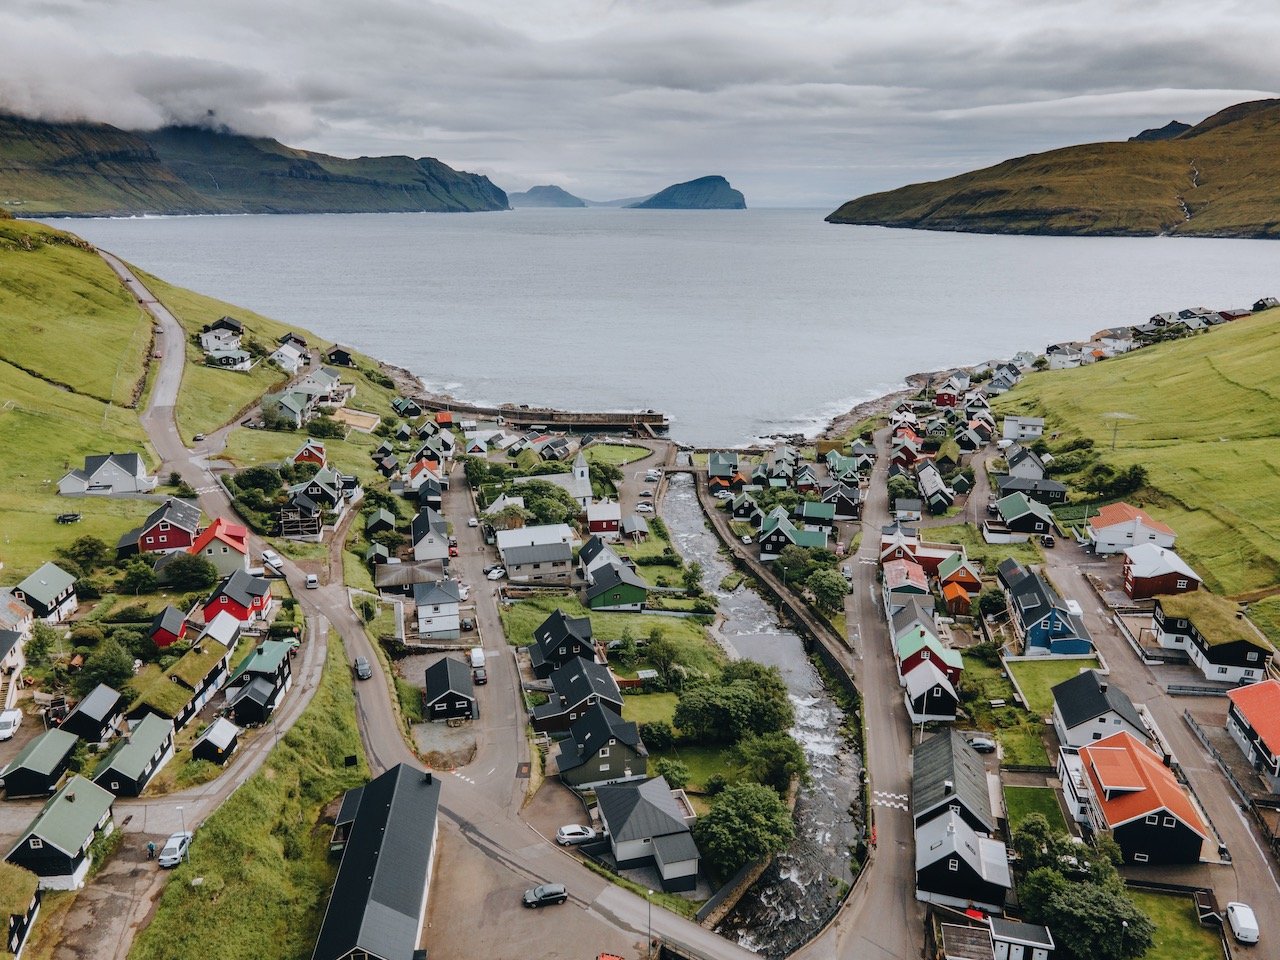   Kvivik, Faroe Islands (ISO 100, 4.5 mm,  f /2.8, 1/30 s)  